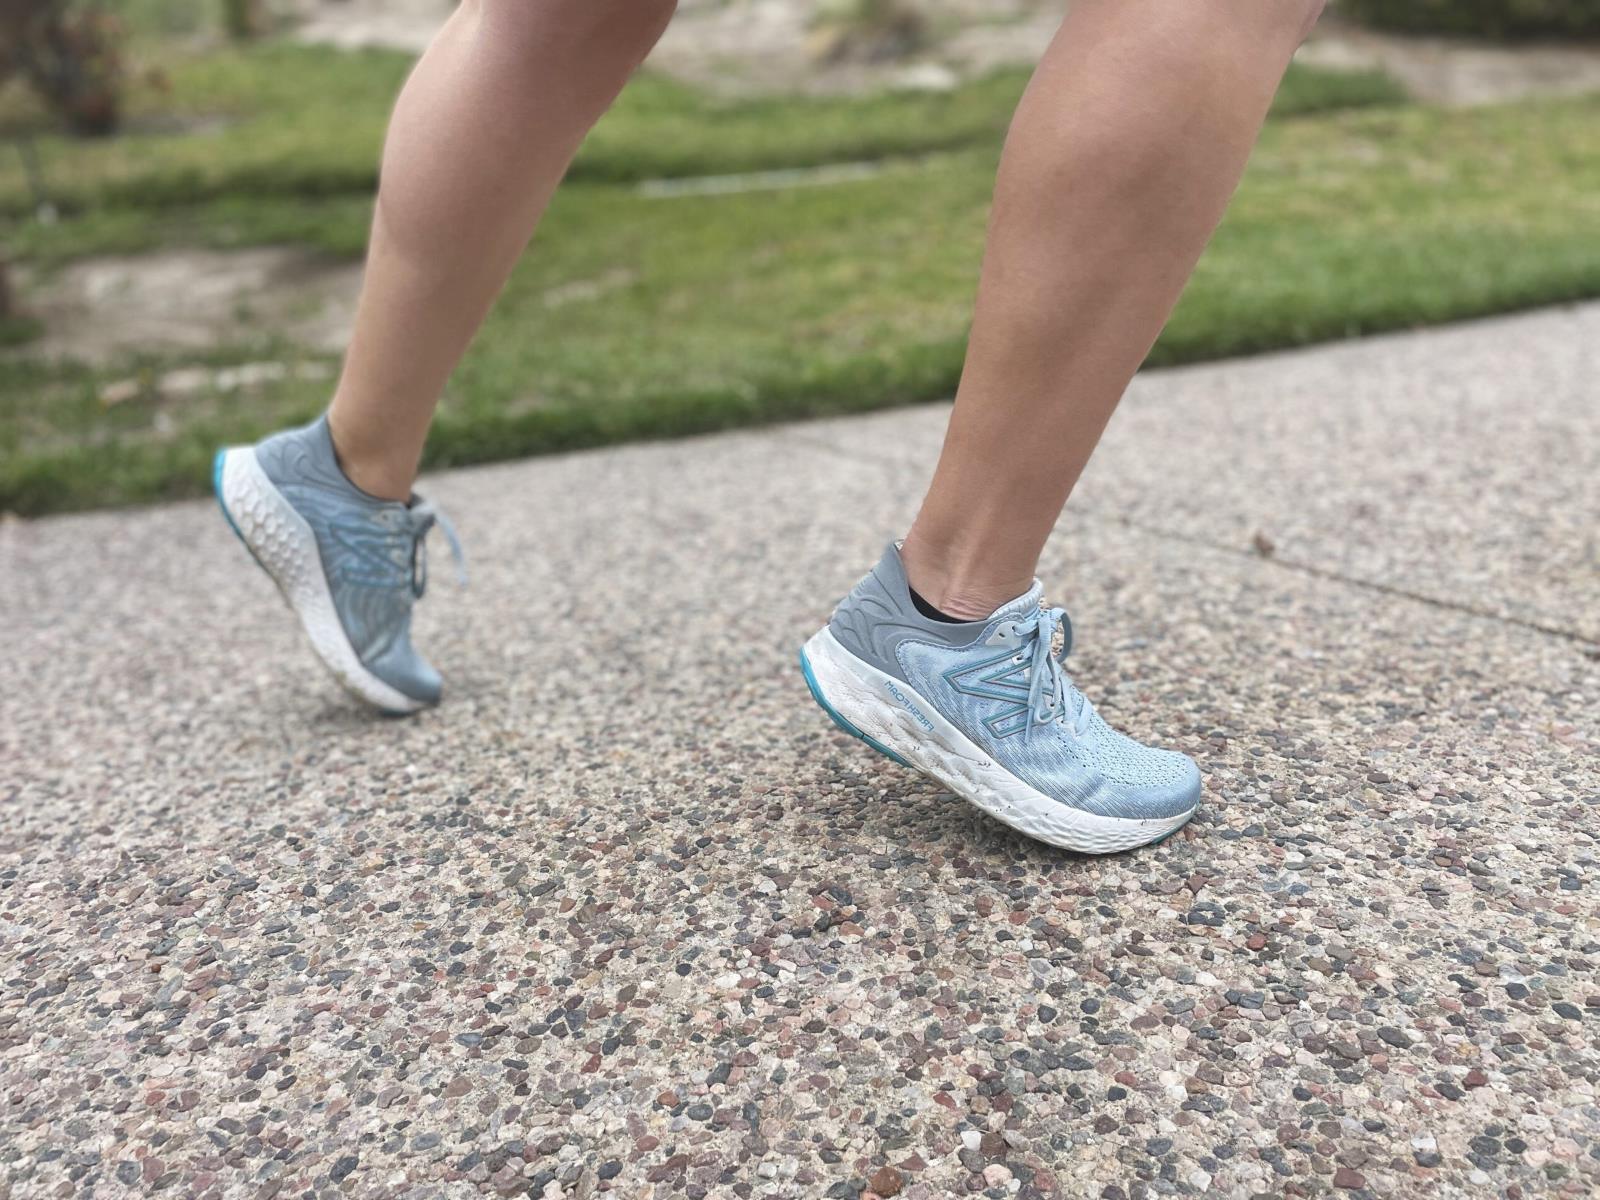 Does Heel Striking Increase The Risk Of Running Injuries?